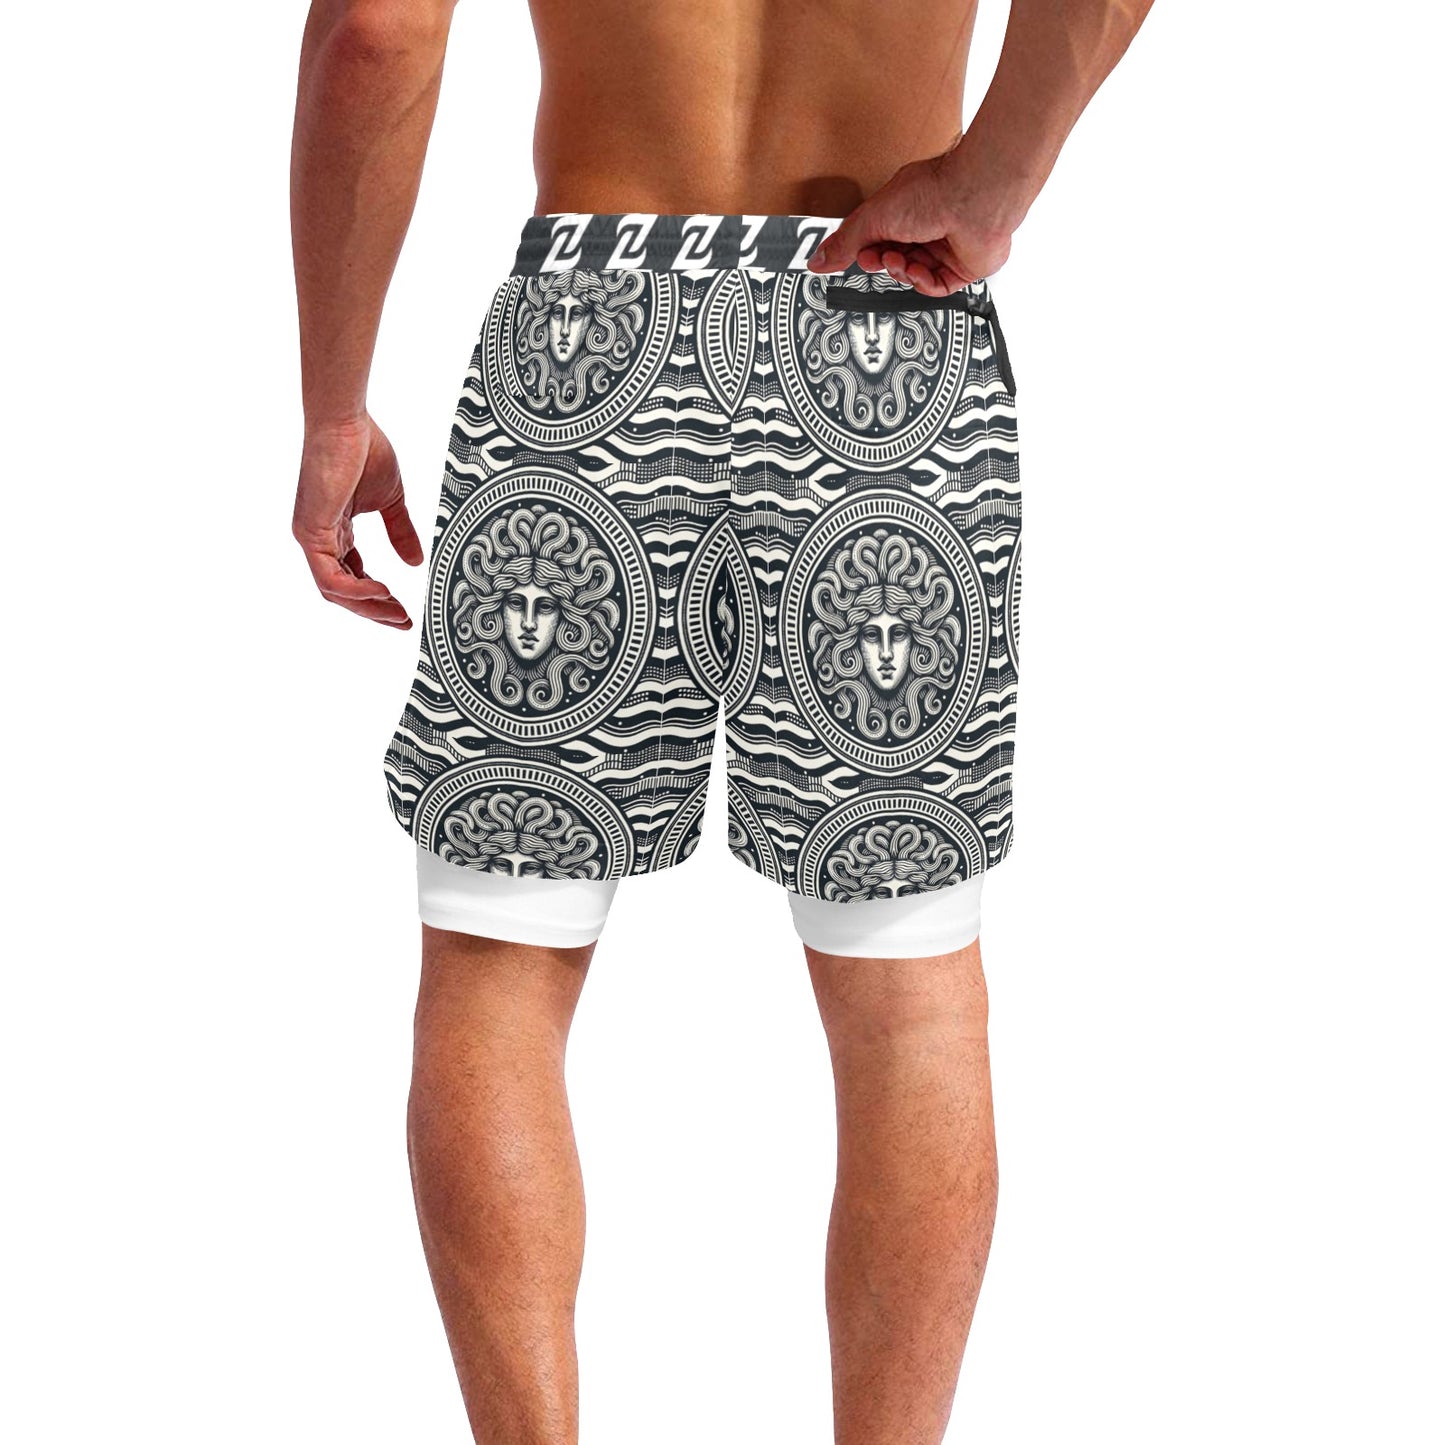 Zen Shorts with Liner - Medusa 1